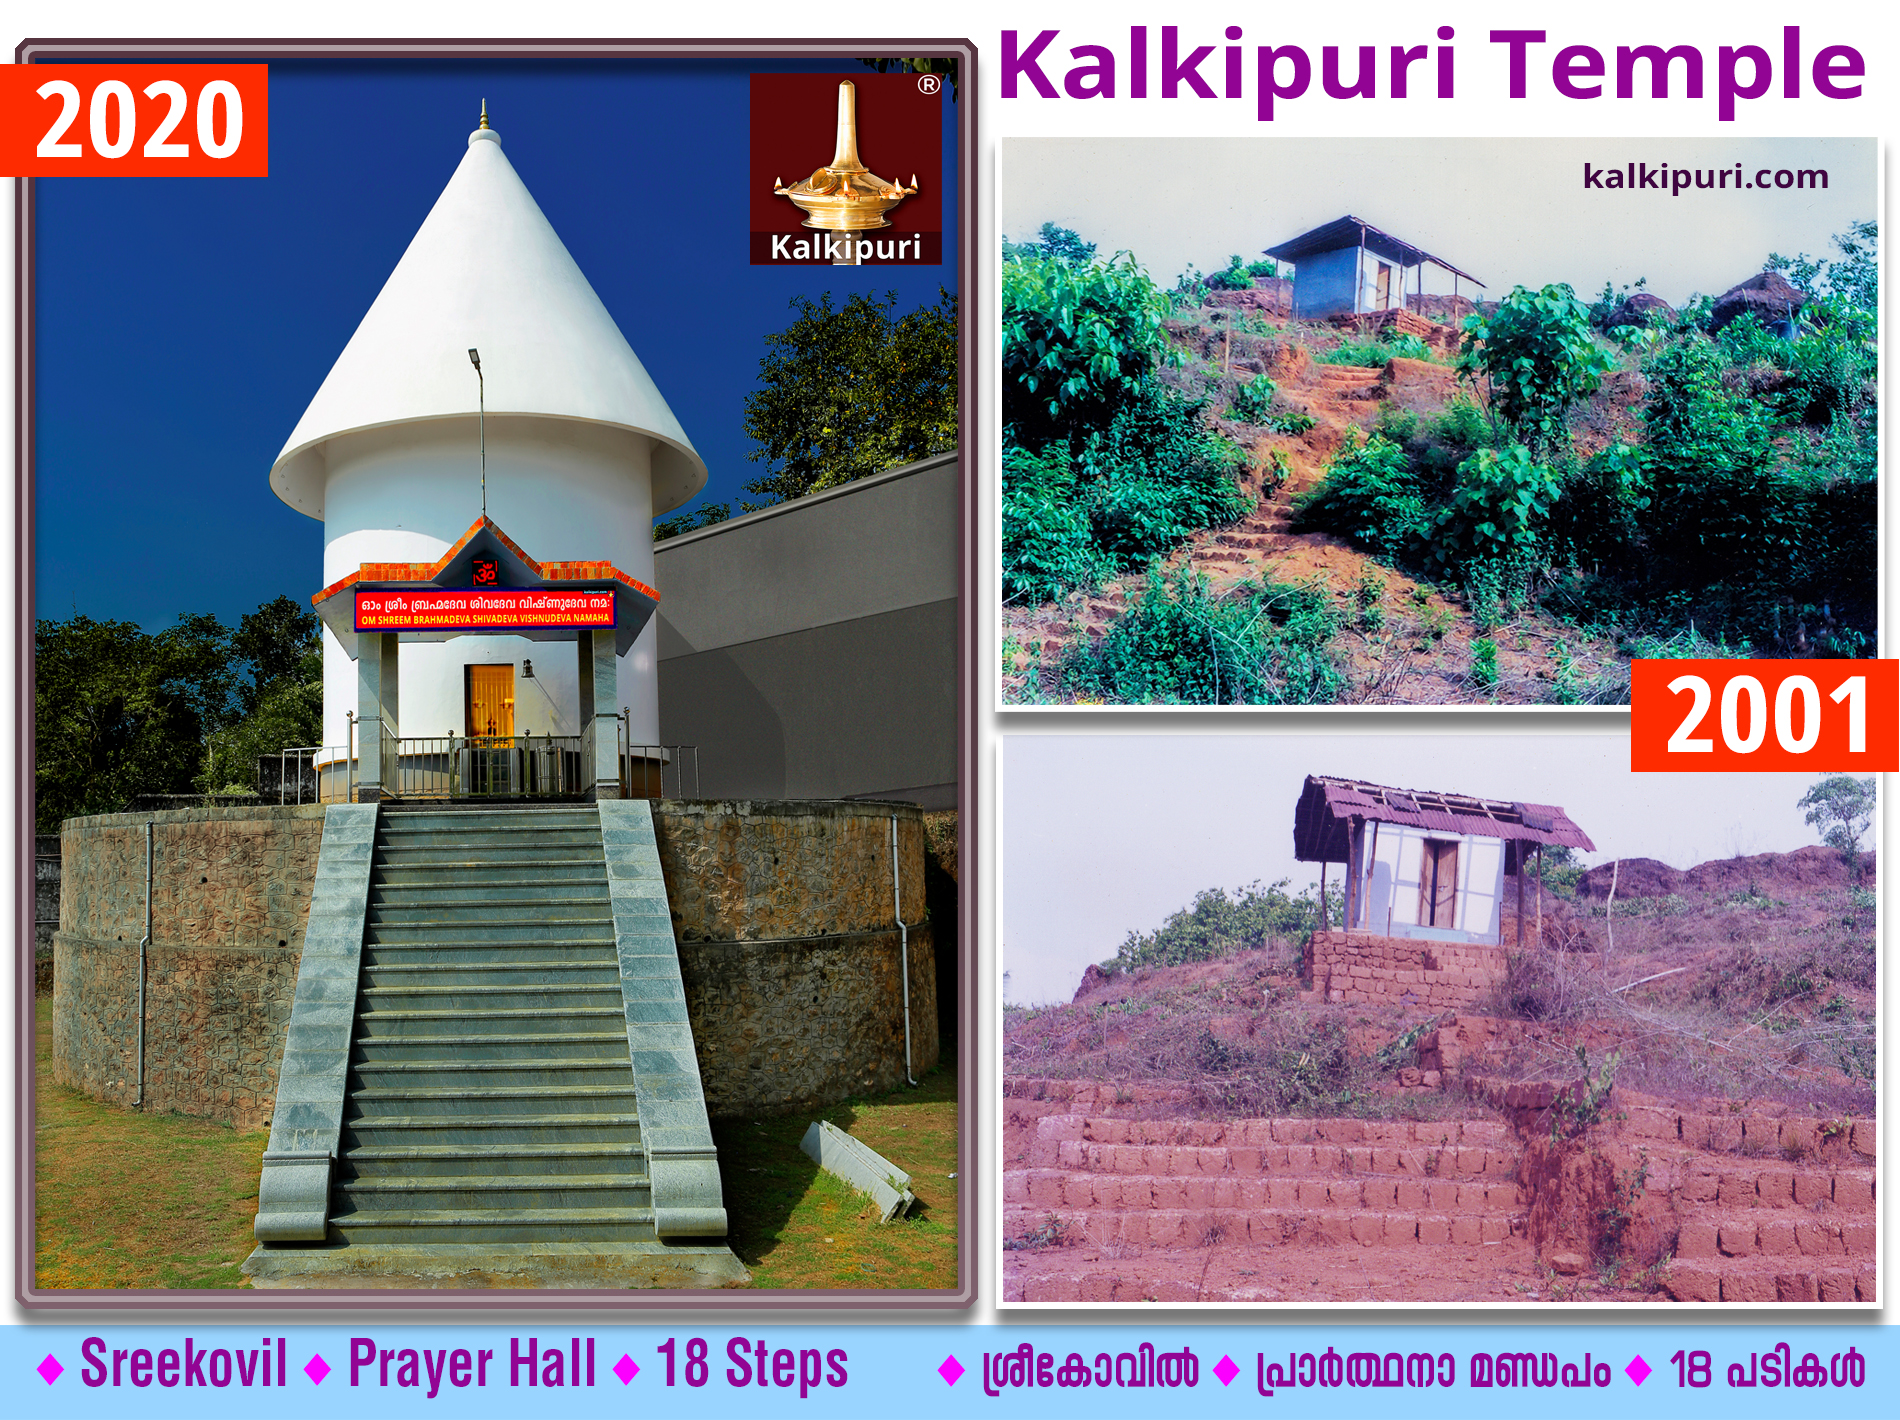 Kalkipuri Temple Estd.2001 by Kalki in His birth place